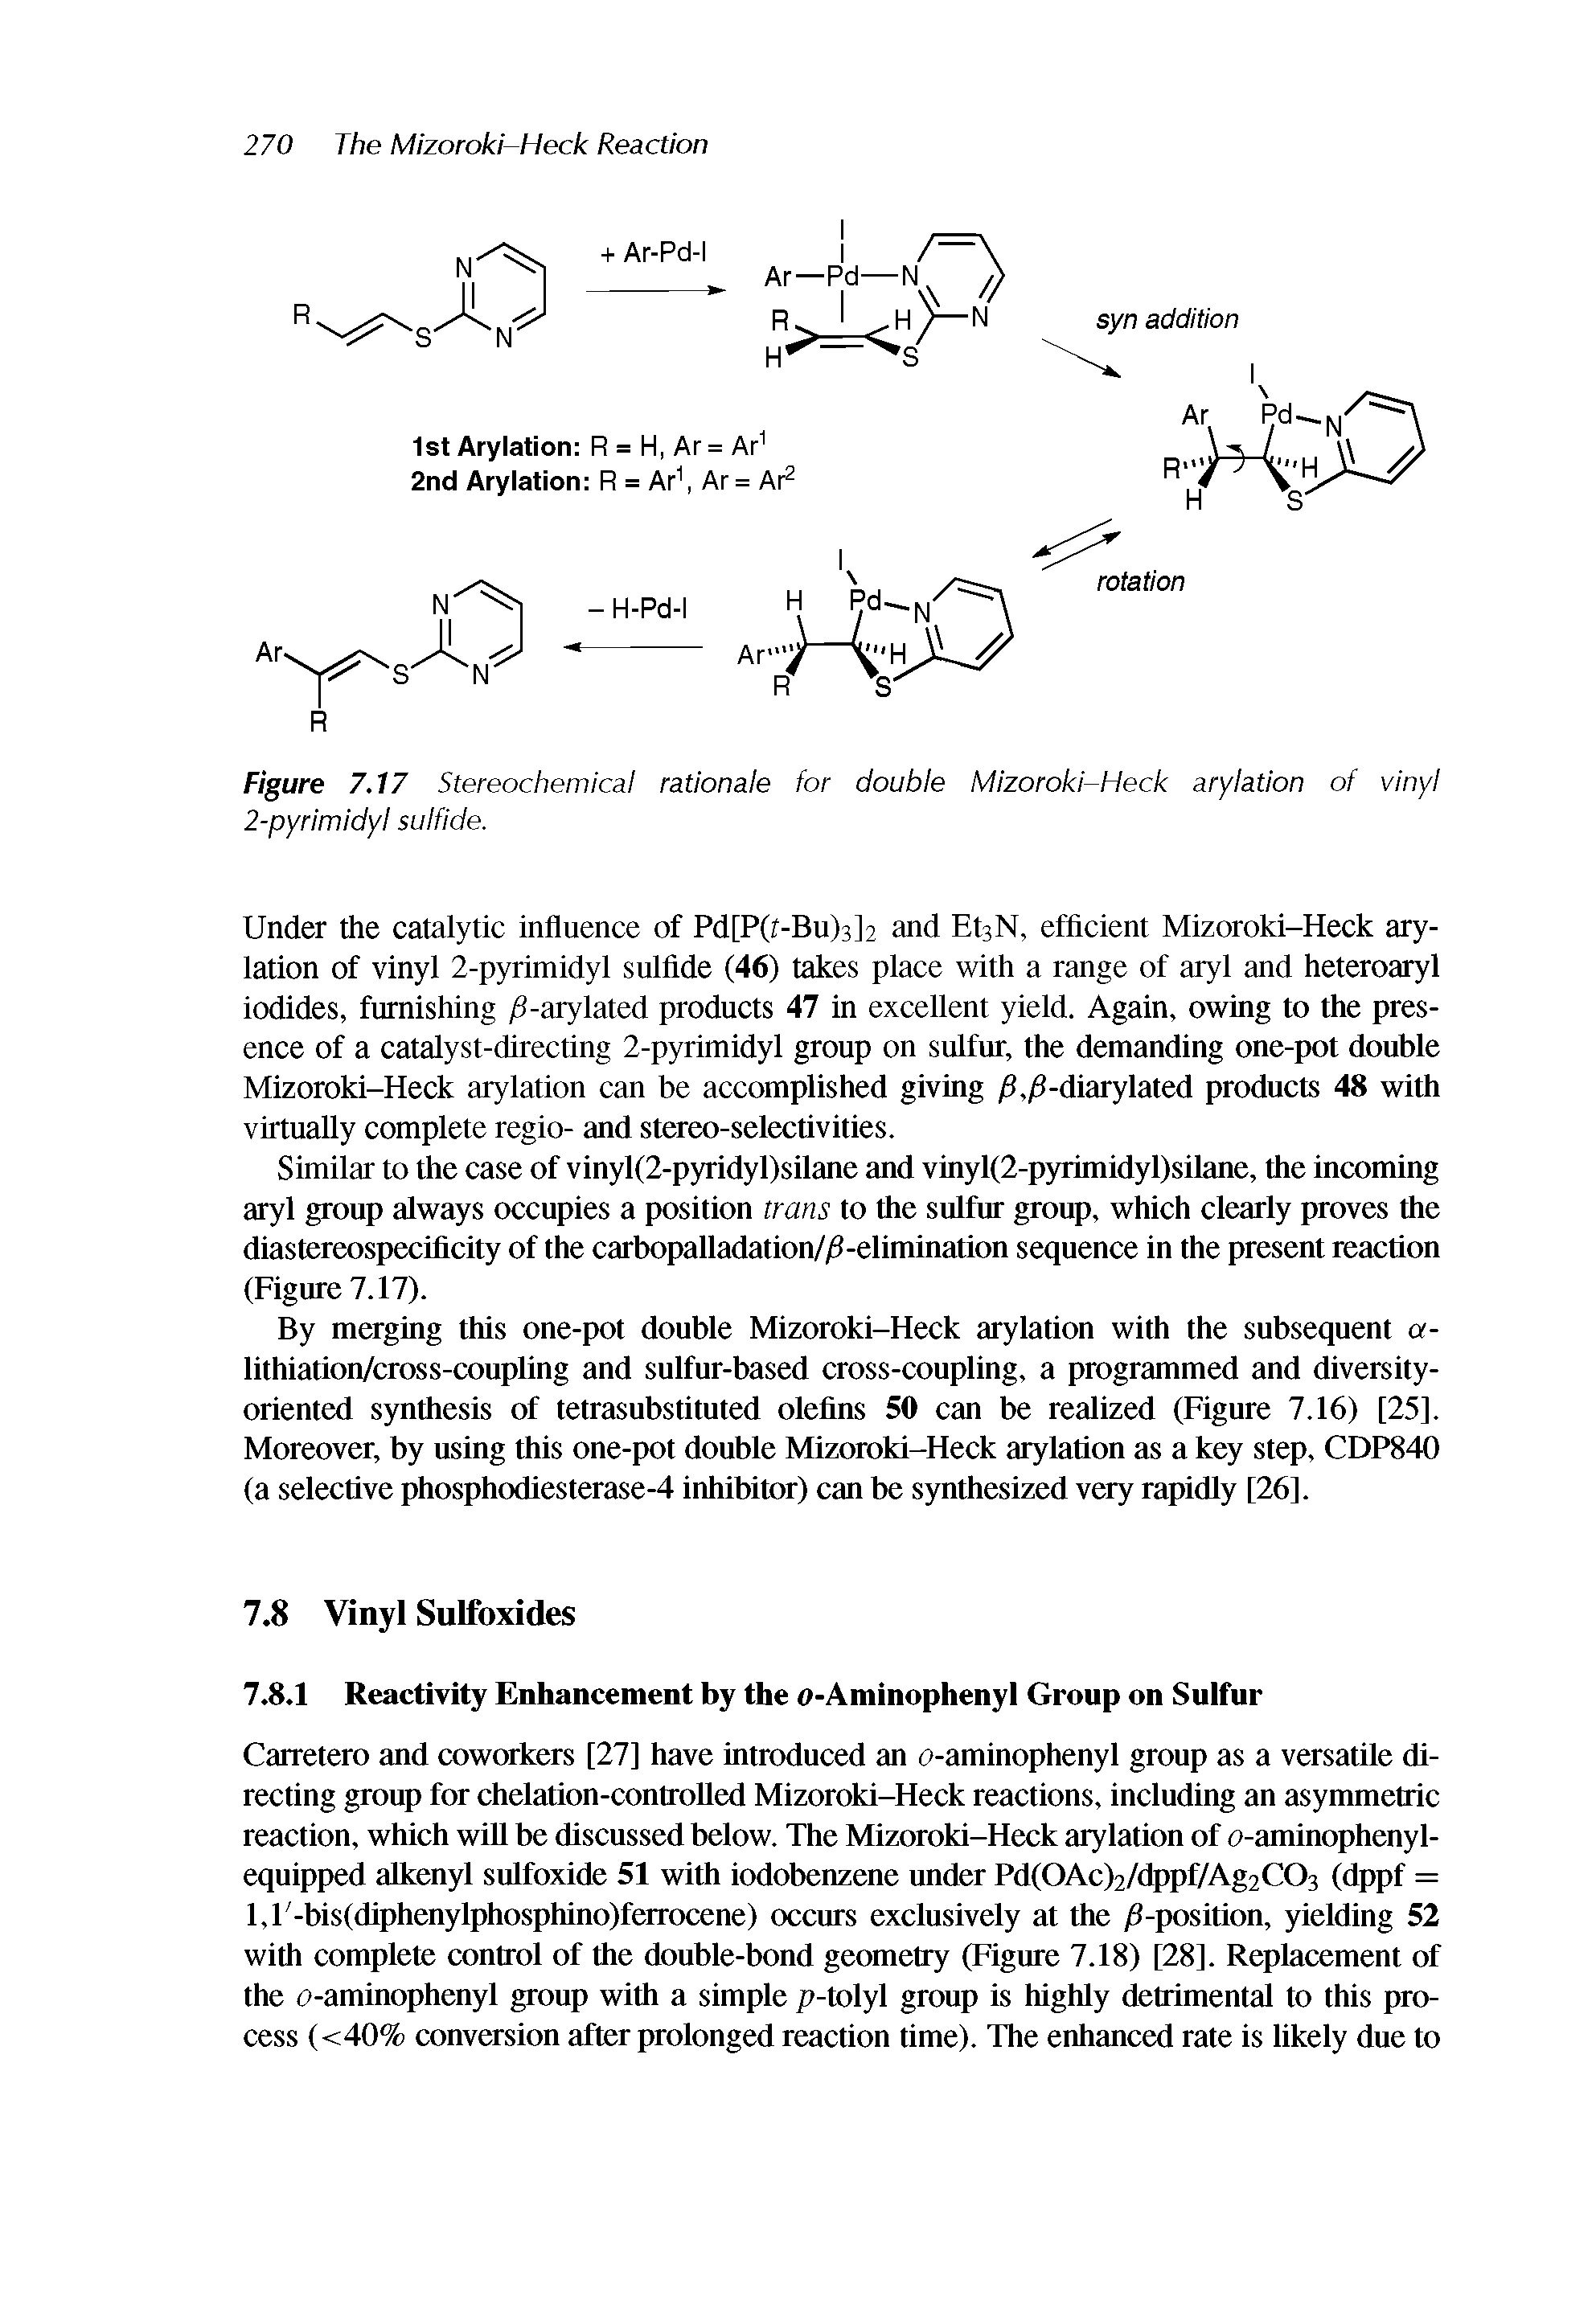 Figure 7.17 Stereochemical rationale for double MIzoroki-Heck arylation of vinyl 2-pyrlmldyl sulfide.